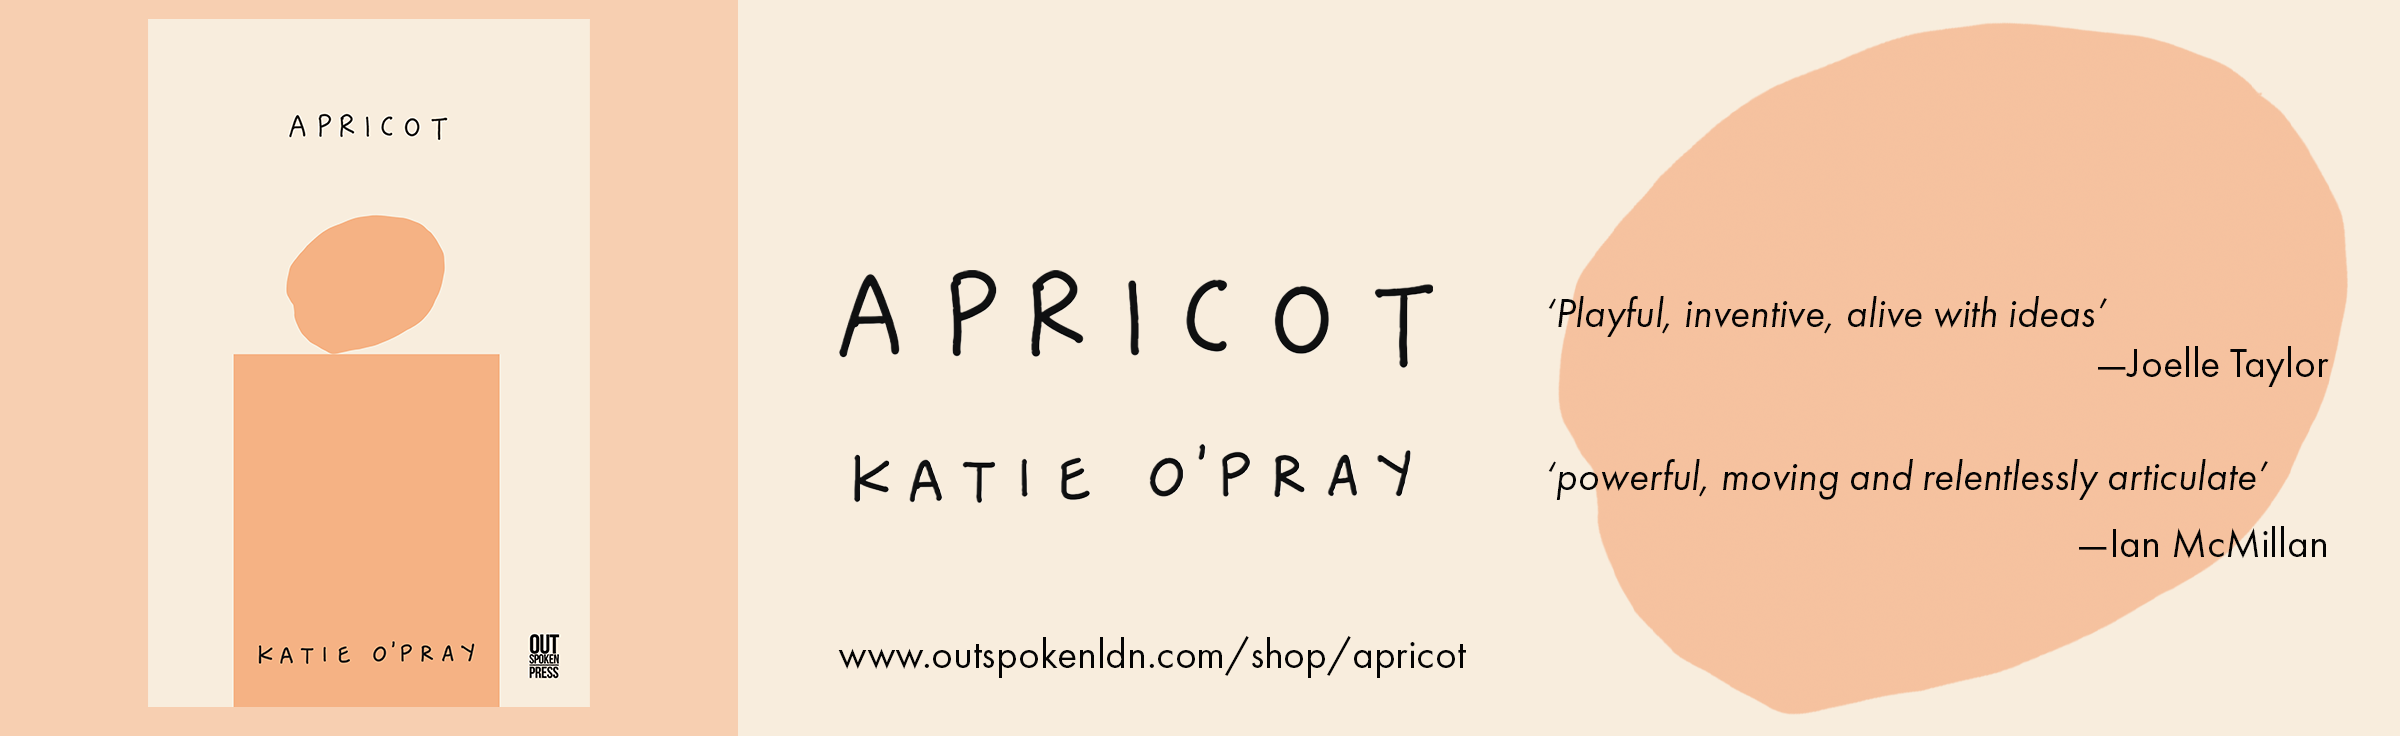 apricot Katie O'Pray shop banner x.png